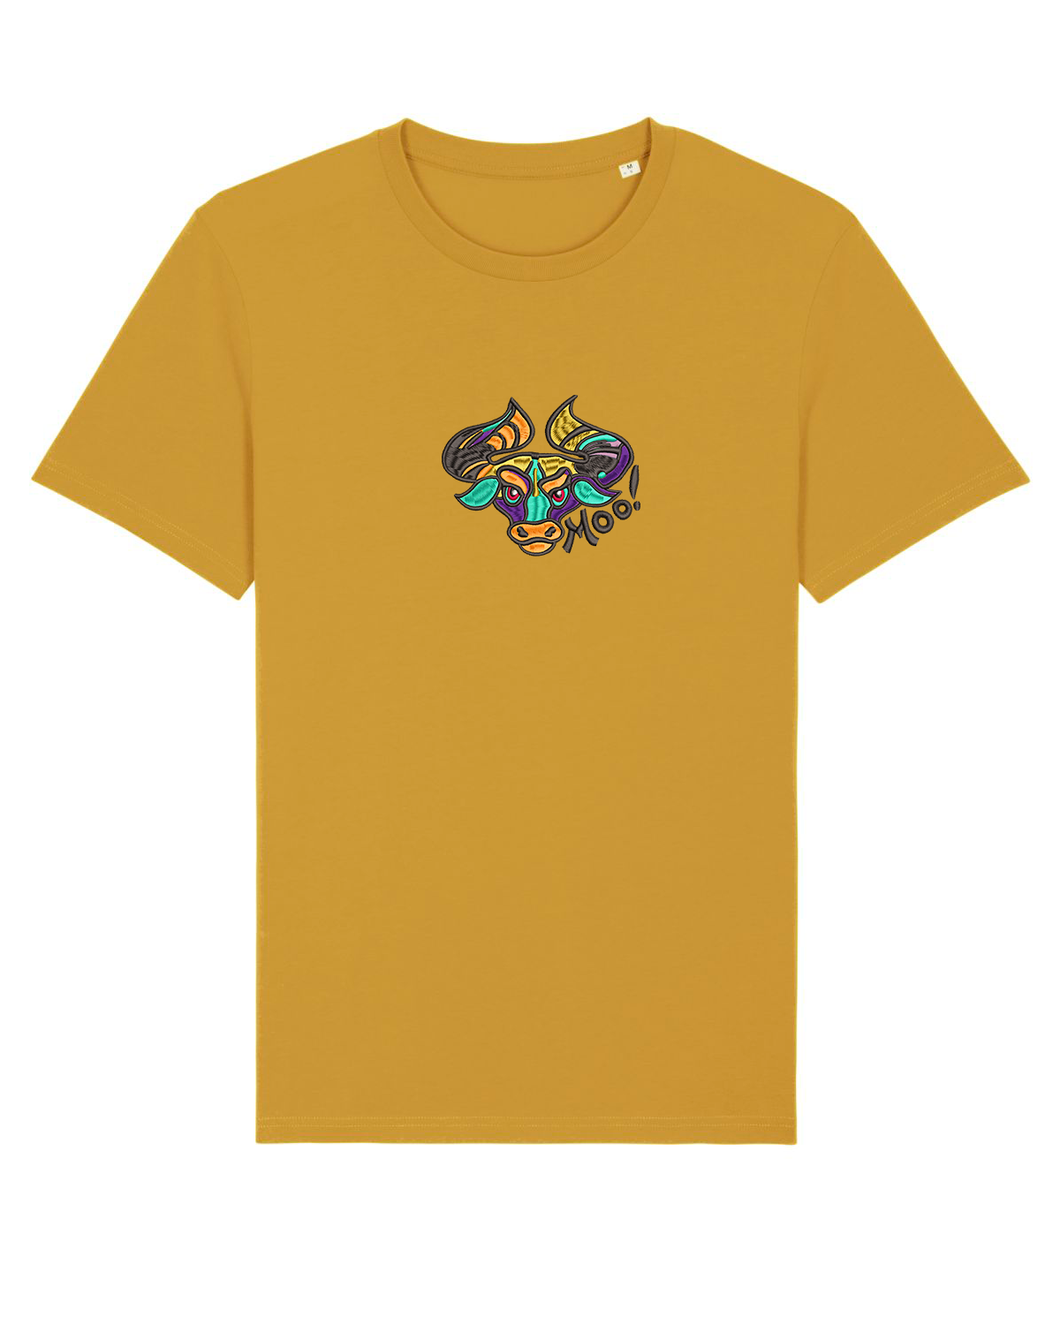 MOO - Embroidered Unisex tshirt